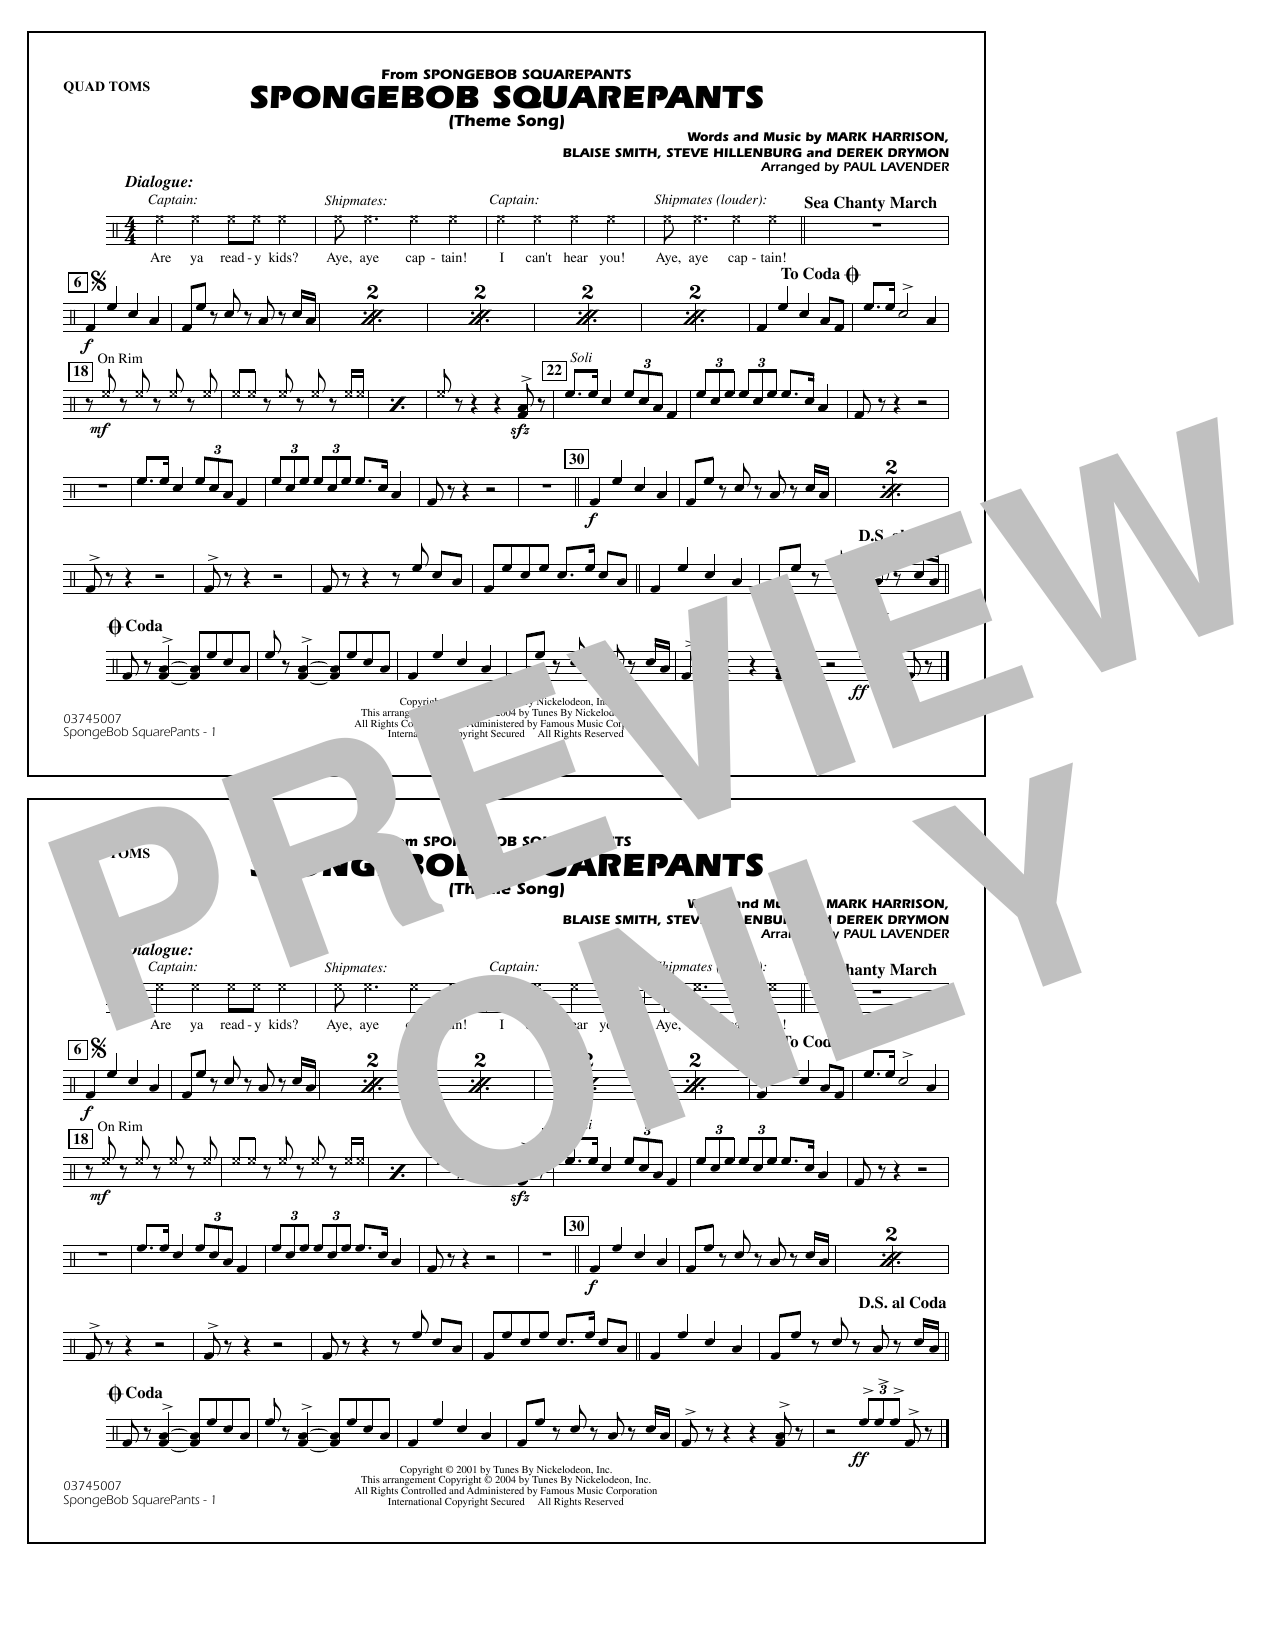 Steve Hillenburg Spongebob Squarepants (Theme Song) (arr. Paul Lavender) - Quad Toms sheet music notes and chords arranged for Marching Band